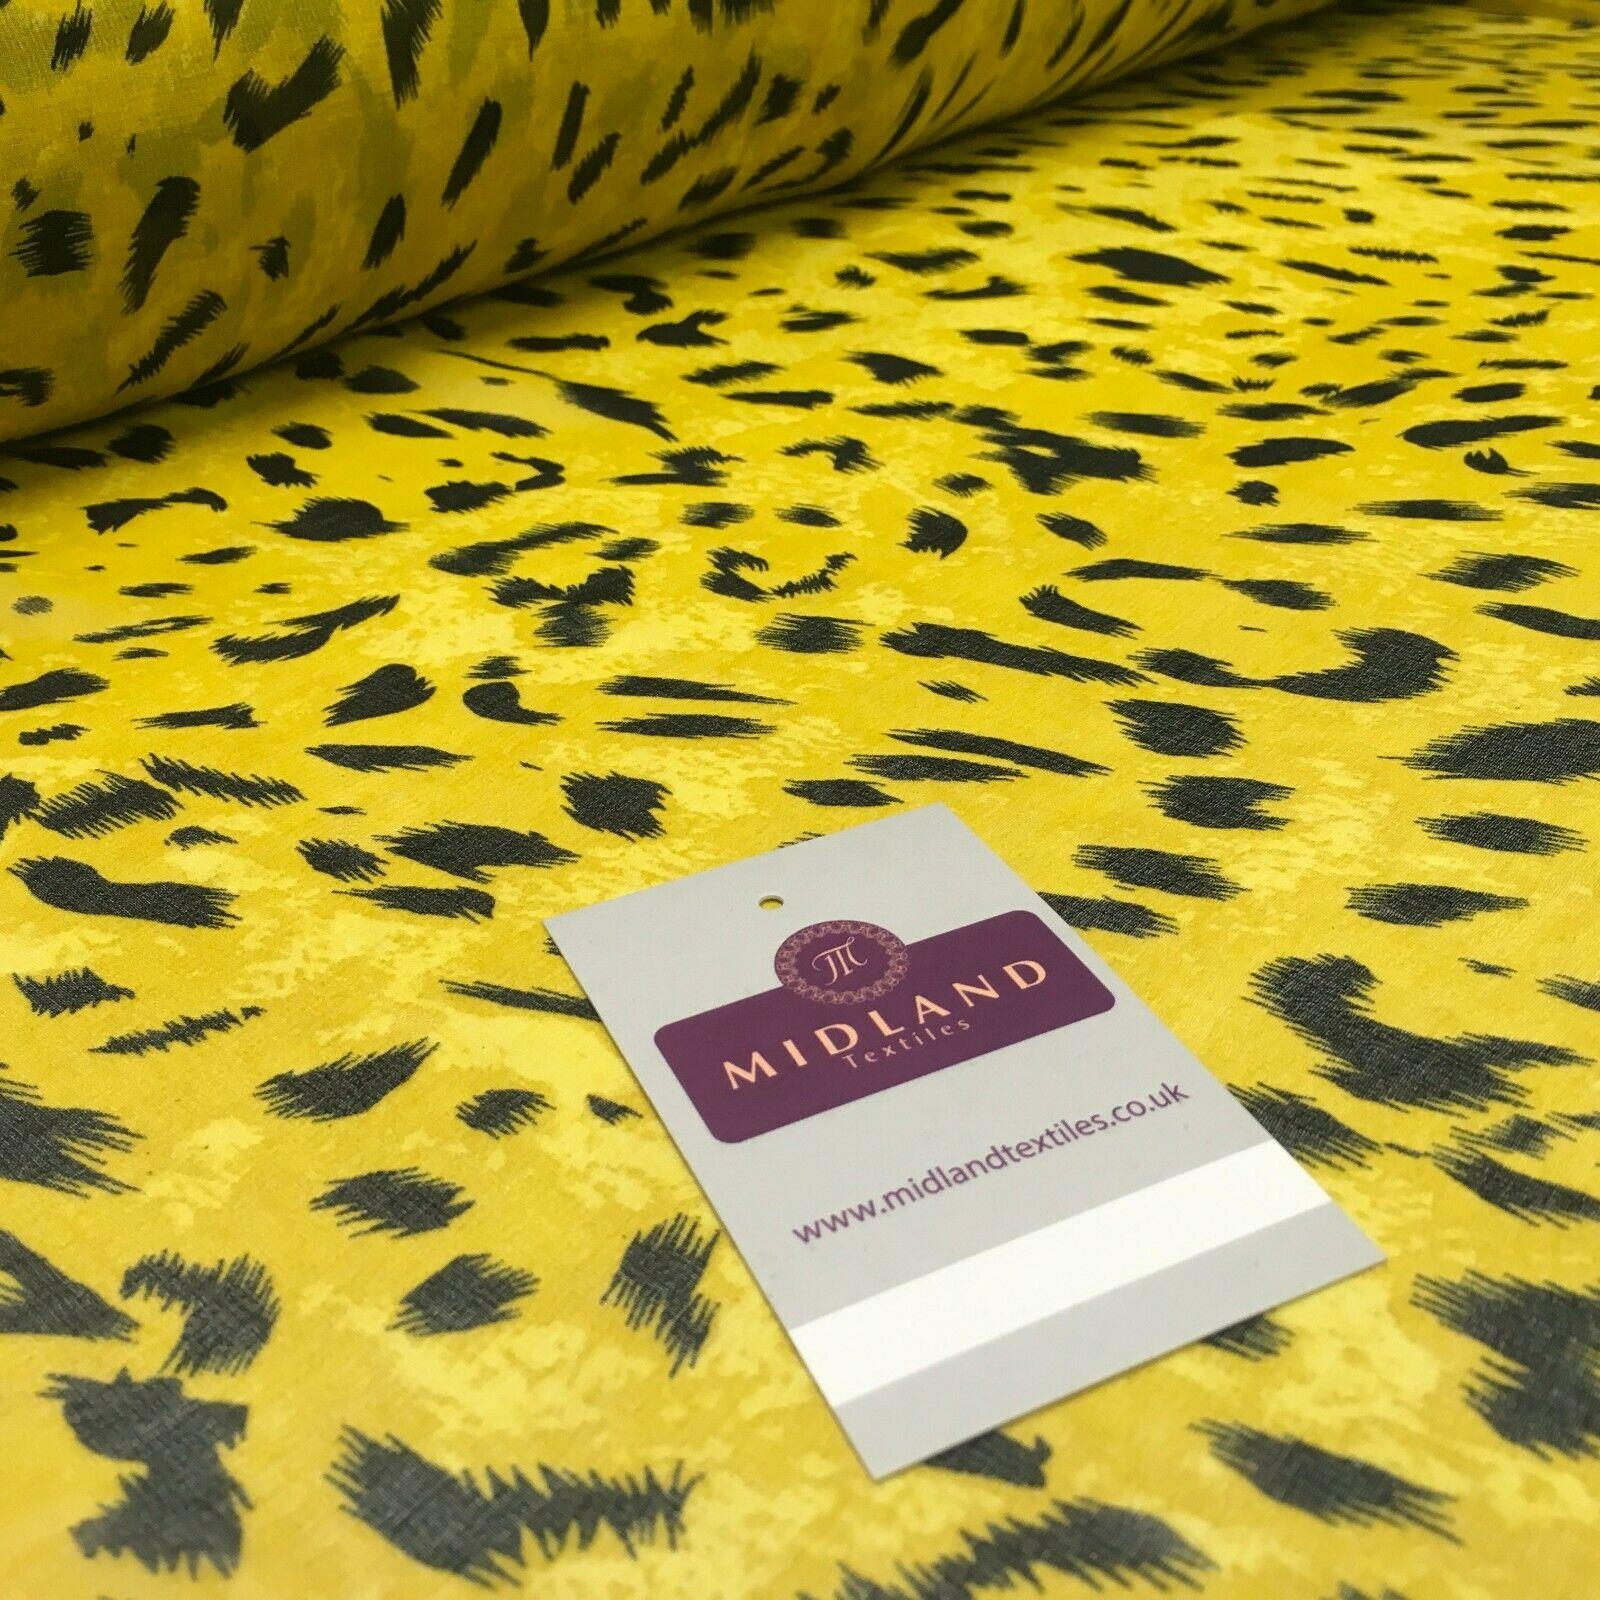 Tiger Gold Animal Printed Crepe chiffon Dress Fabric 150 cm MK1190-29 Mtex